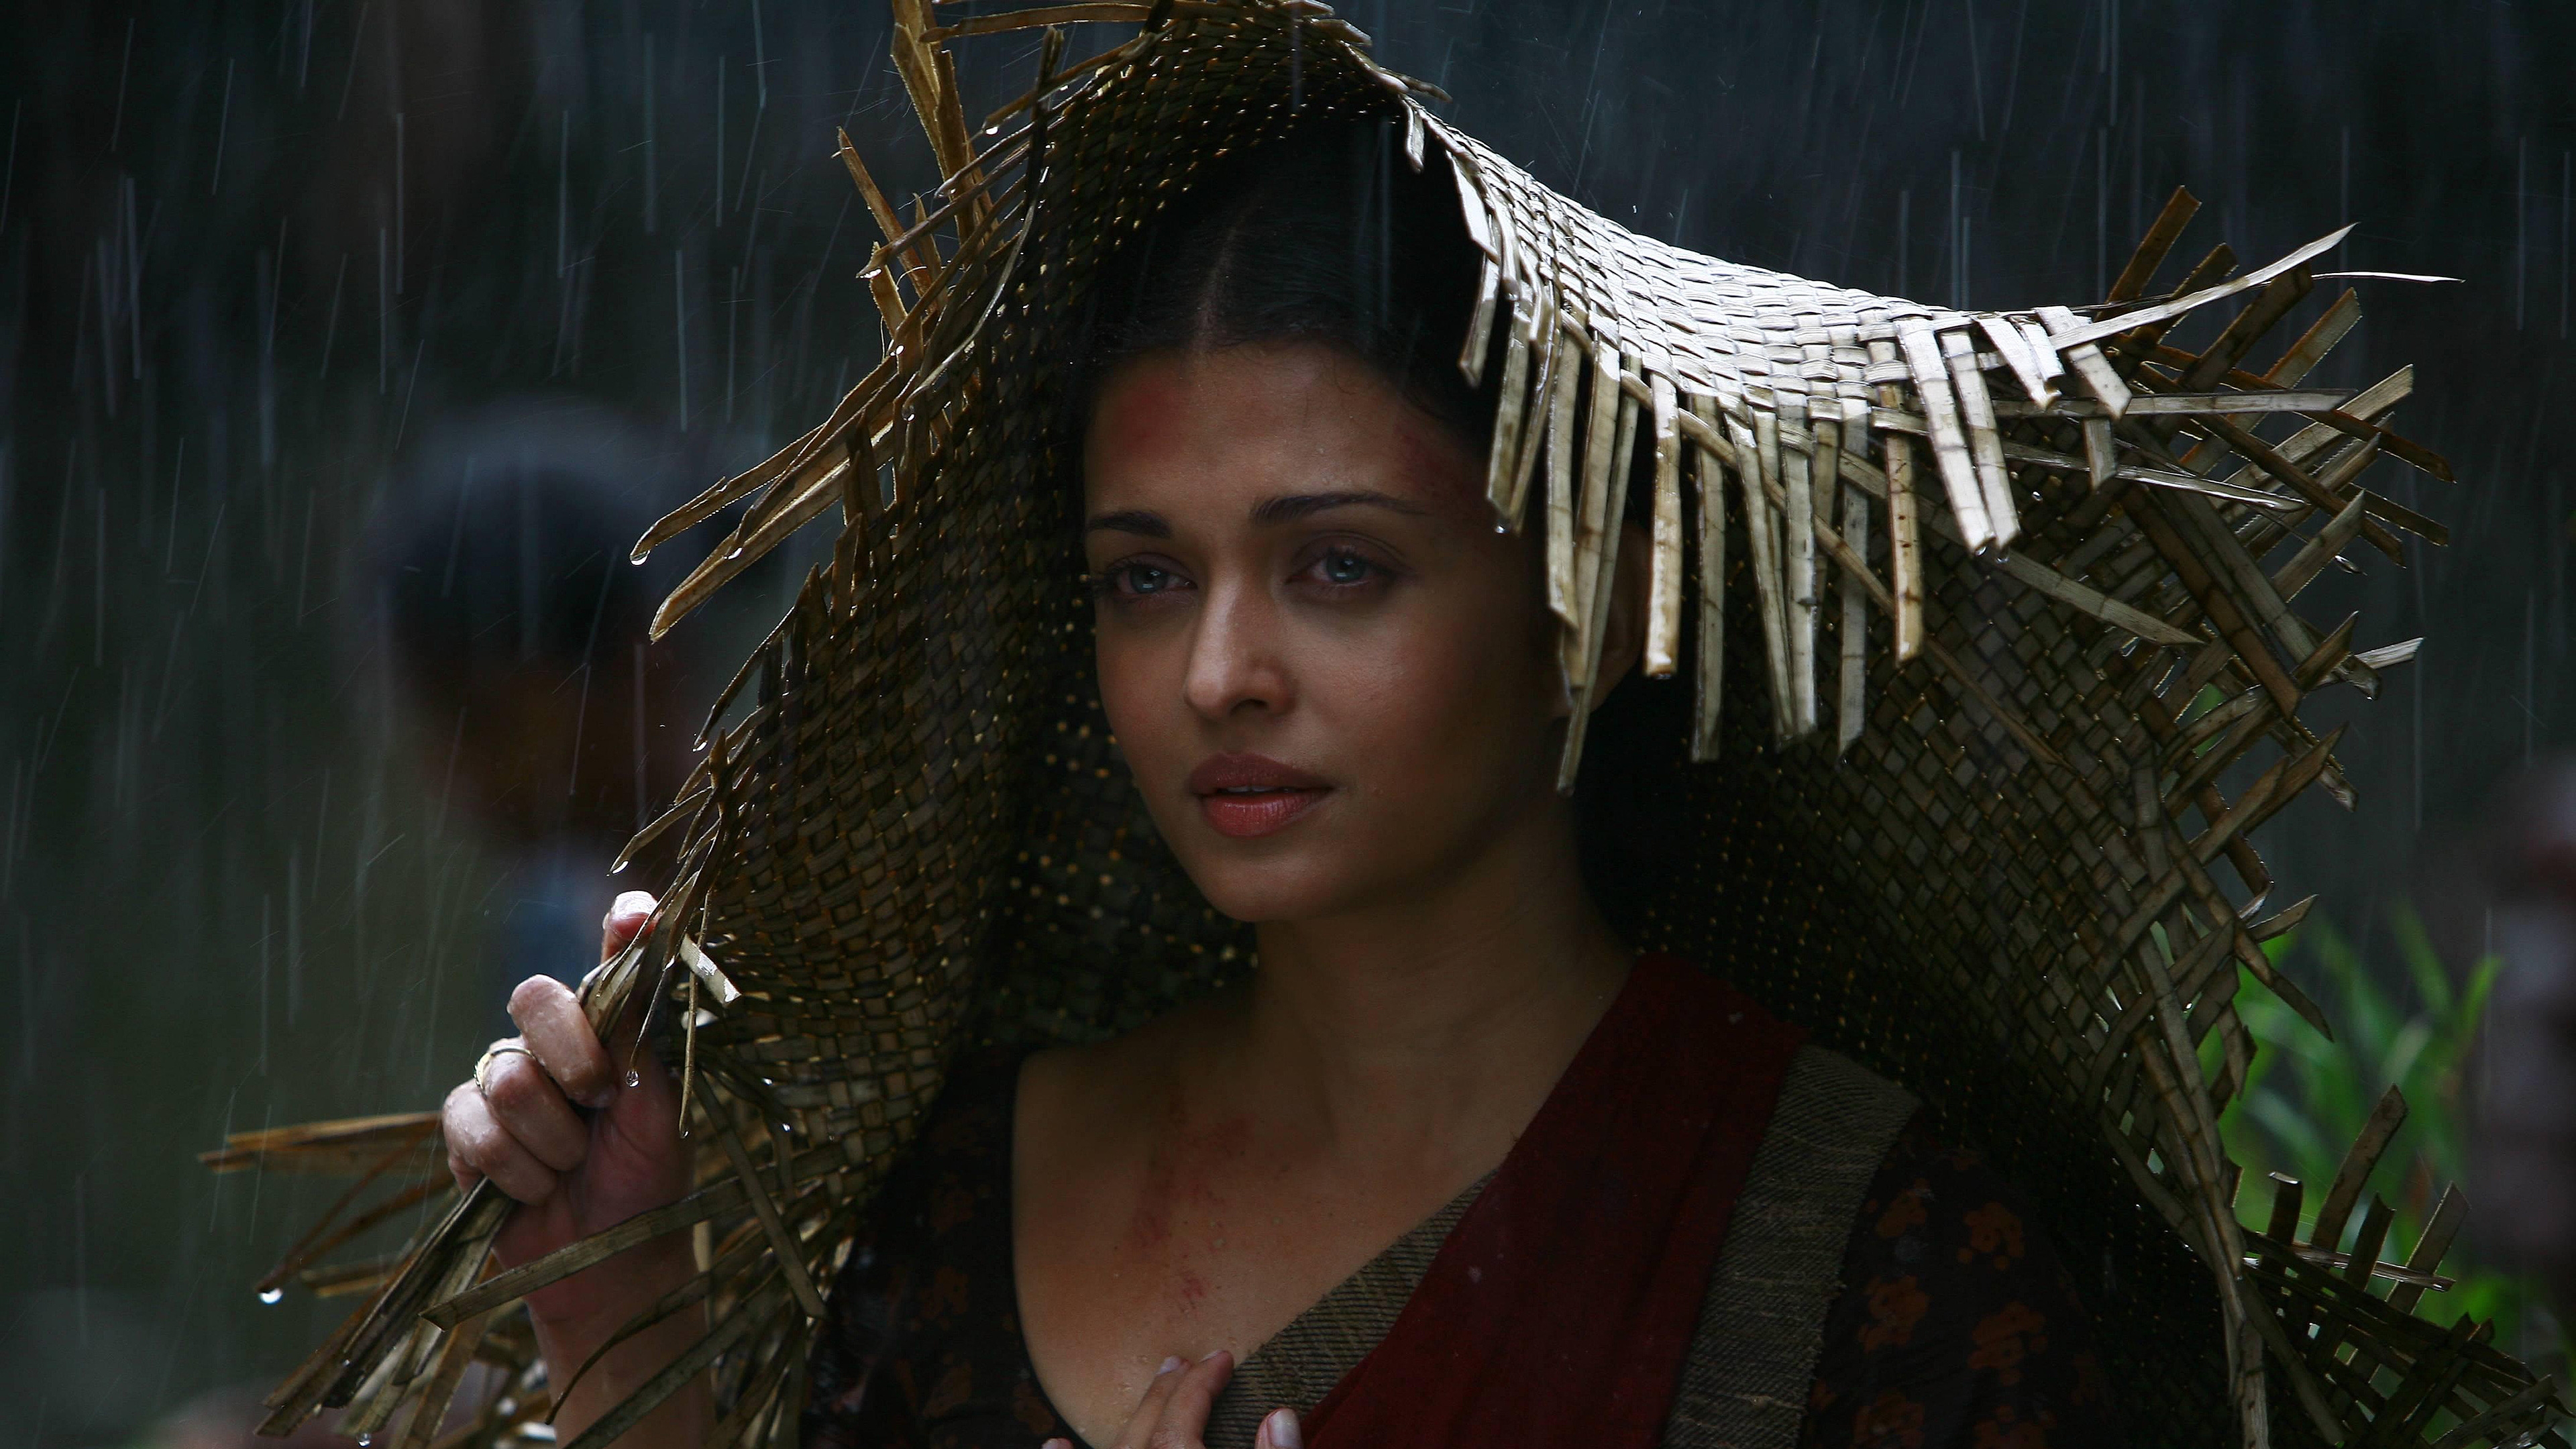 Aishwarya Rai Movie Scene for 3840 x 2160 Ultra HD resolution